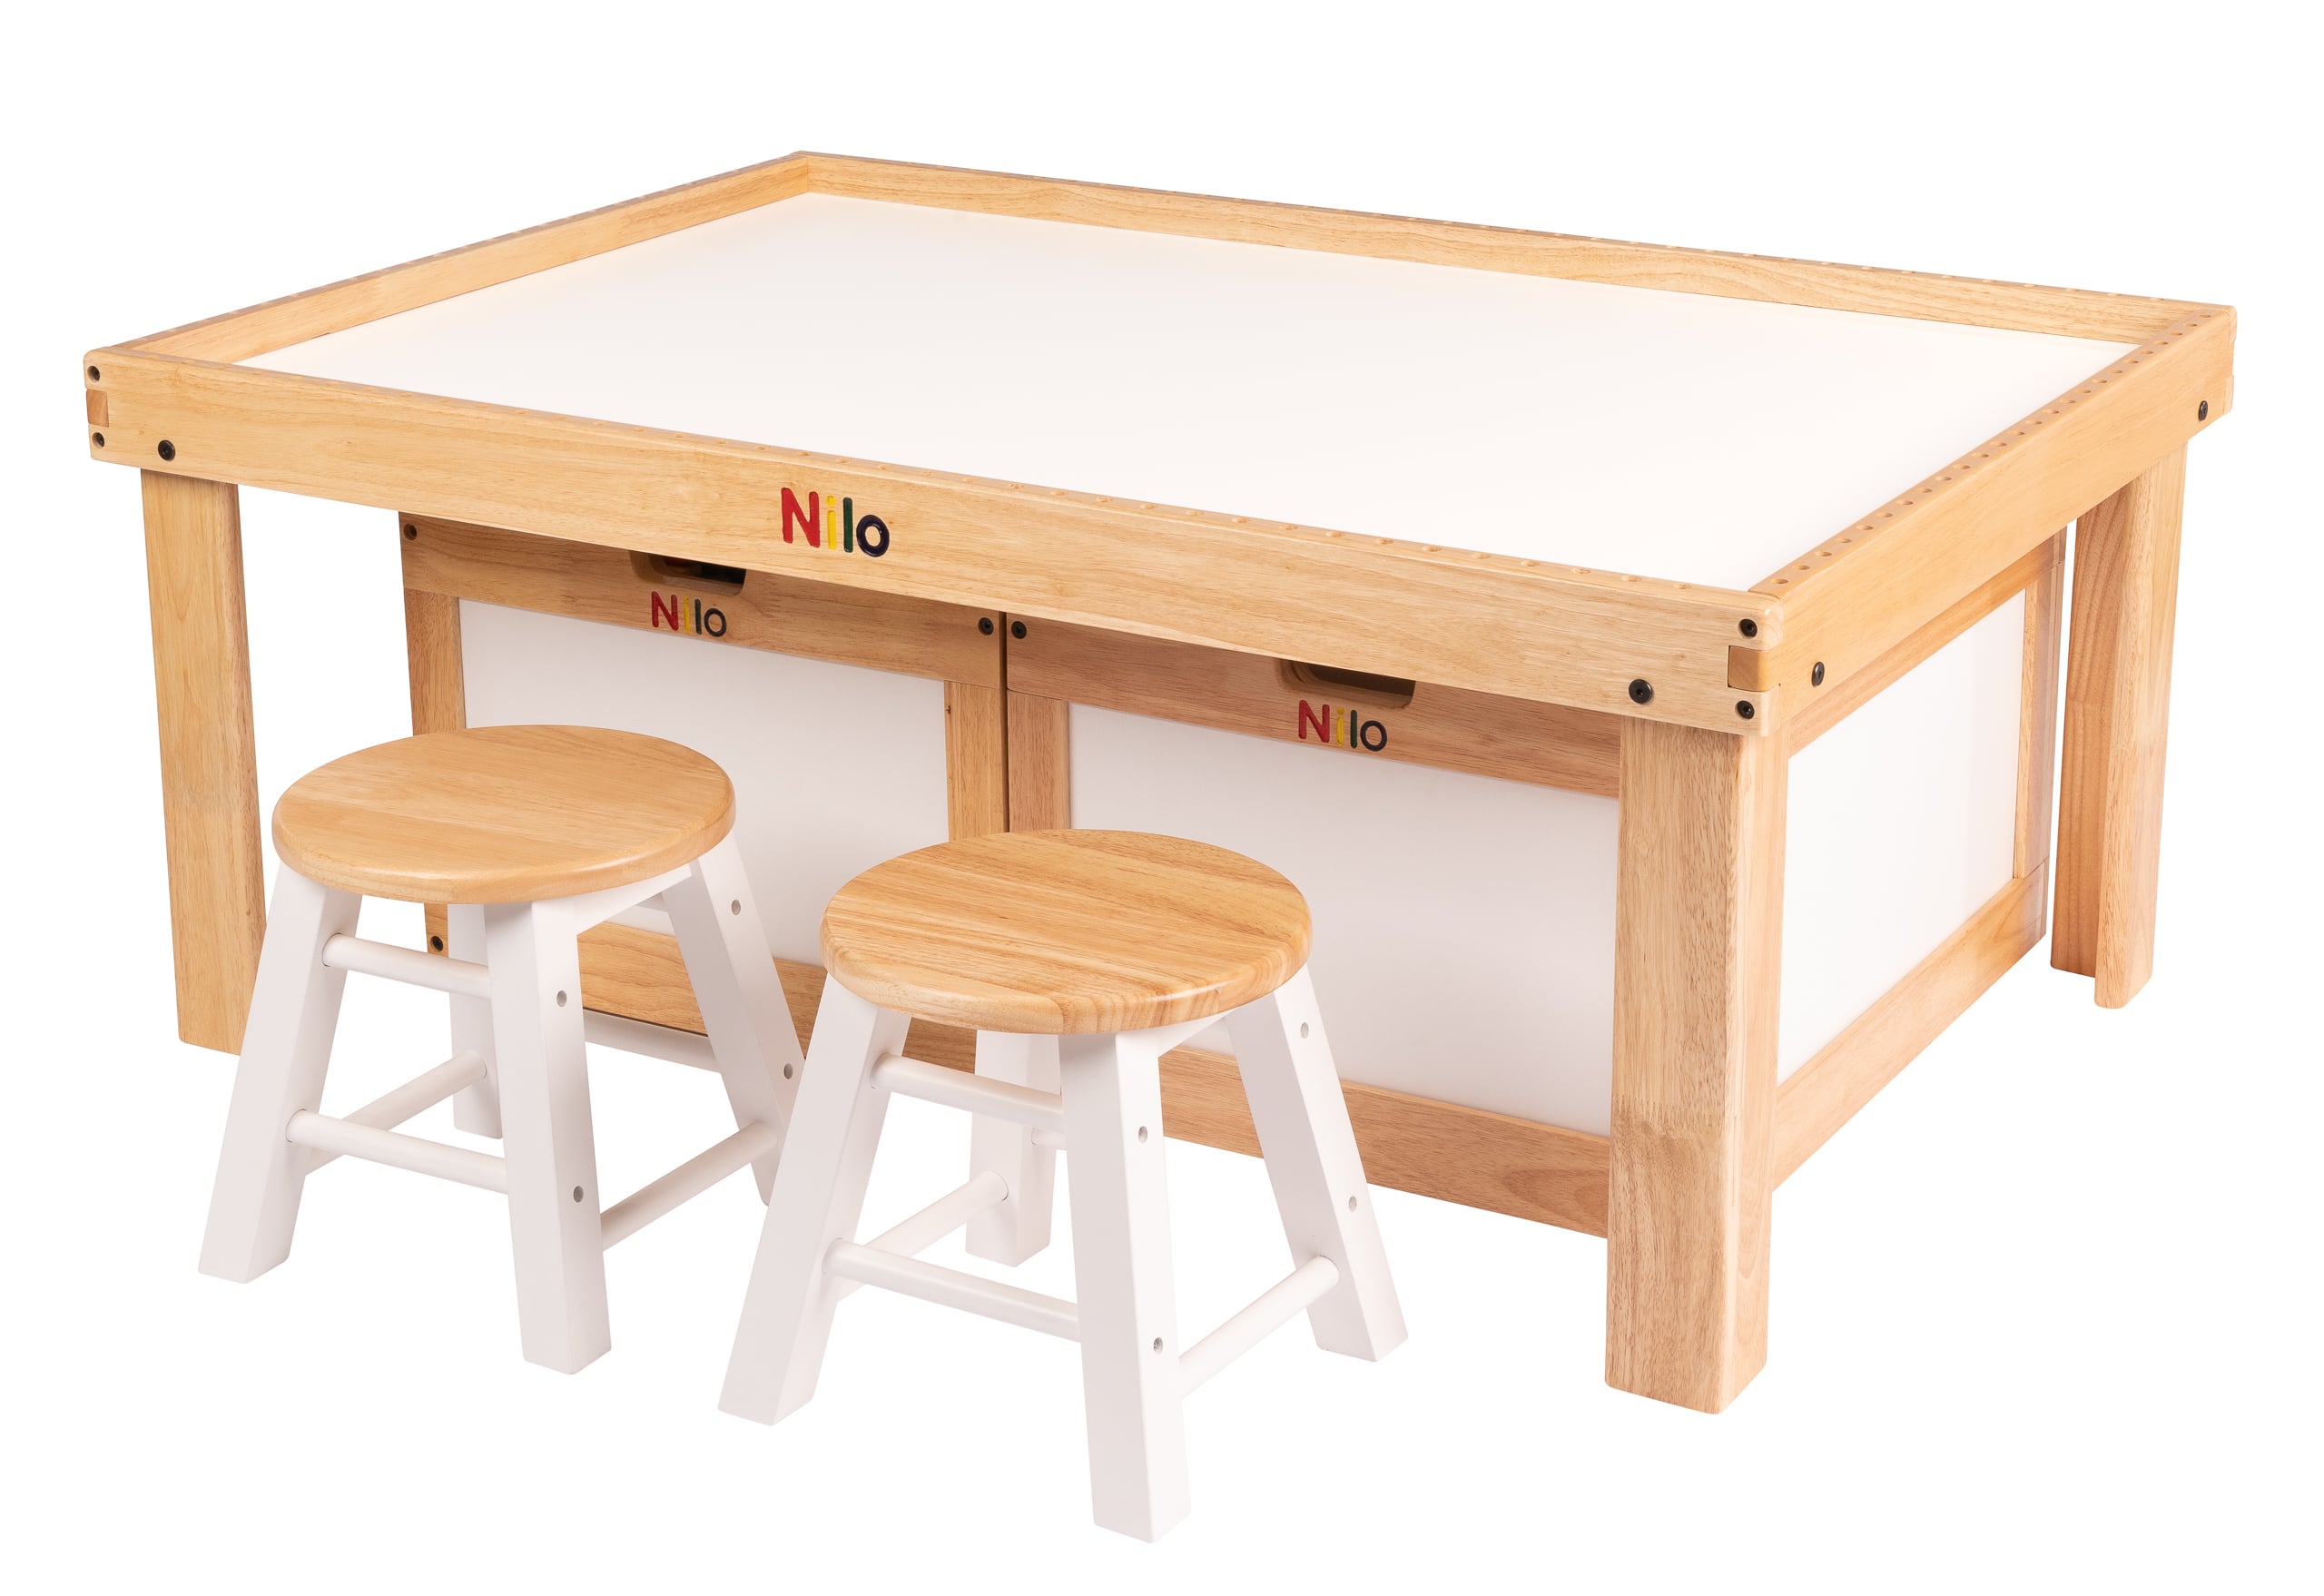 Nilo Table, Play Table, Kids furniture, Kids seating, toddler furniture, baby furniture